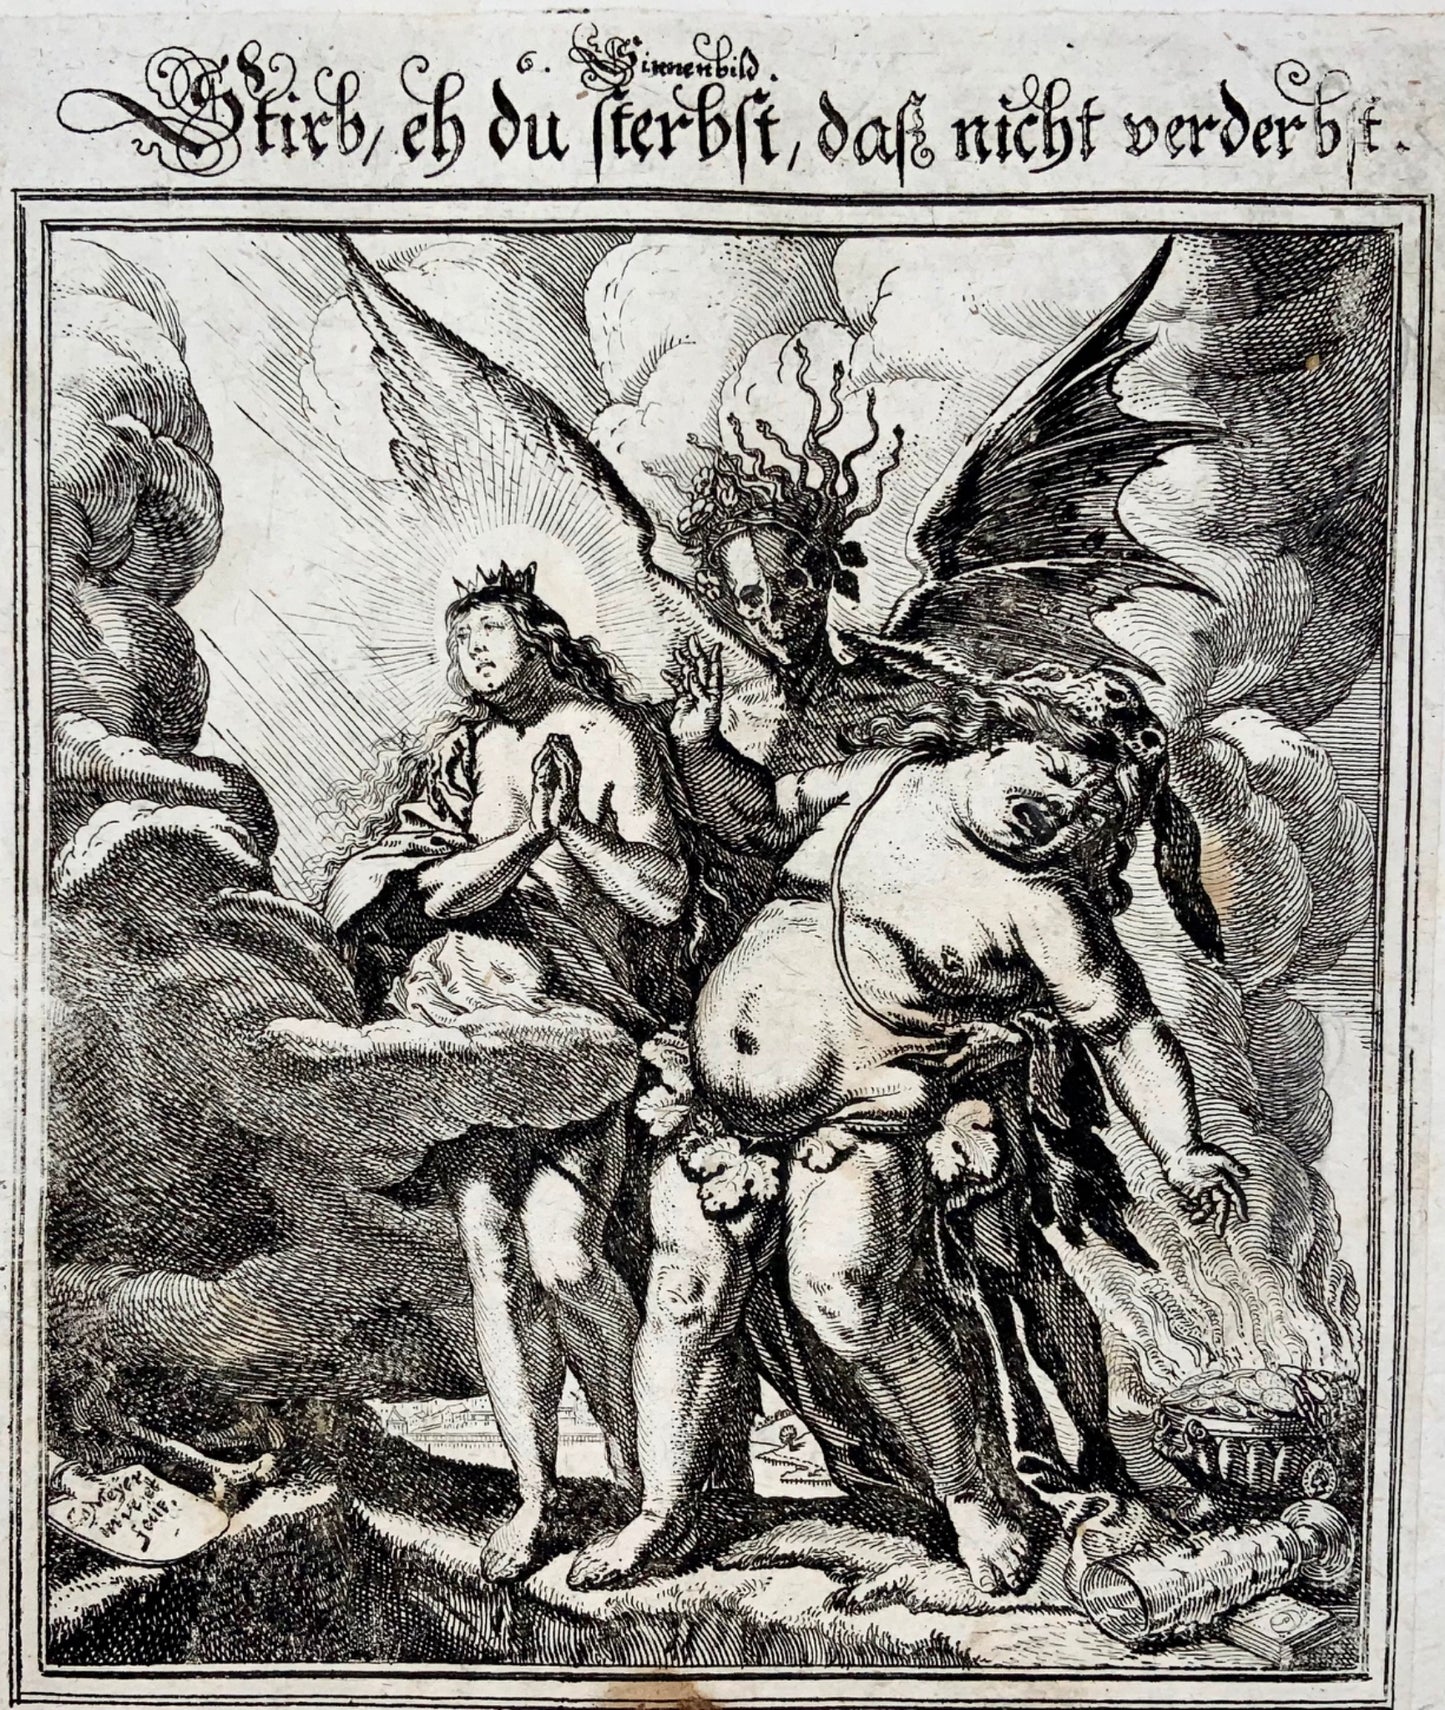 1655 Broadside Dance of Death, « Stirb… », Conrad Meyer, maître de la gravure